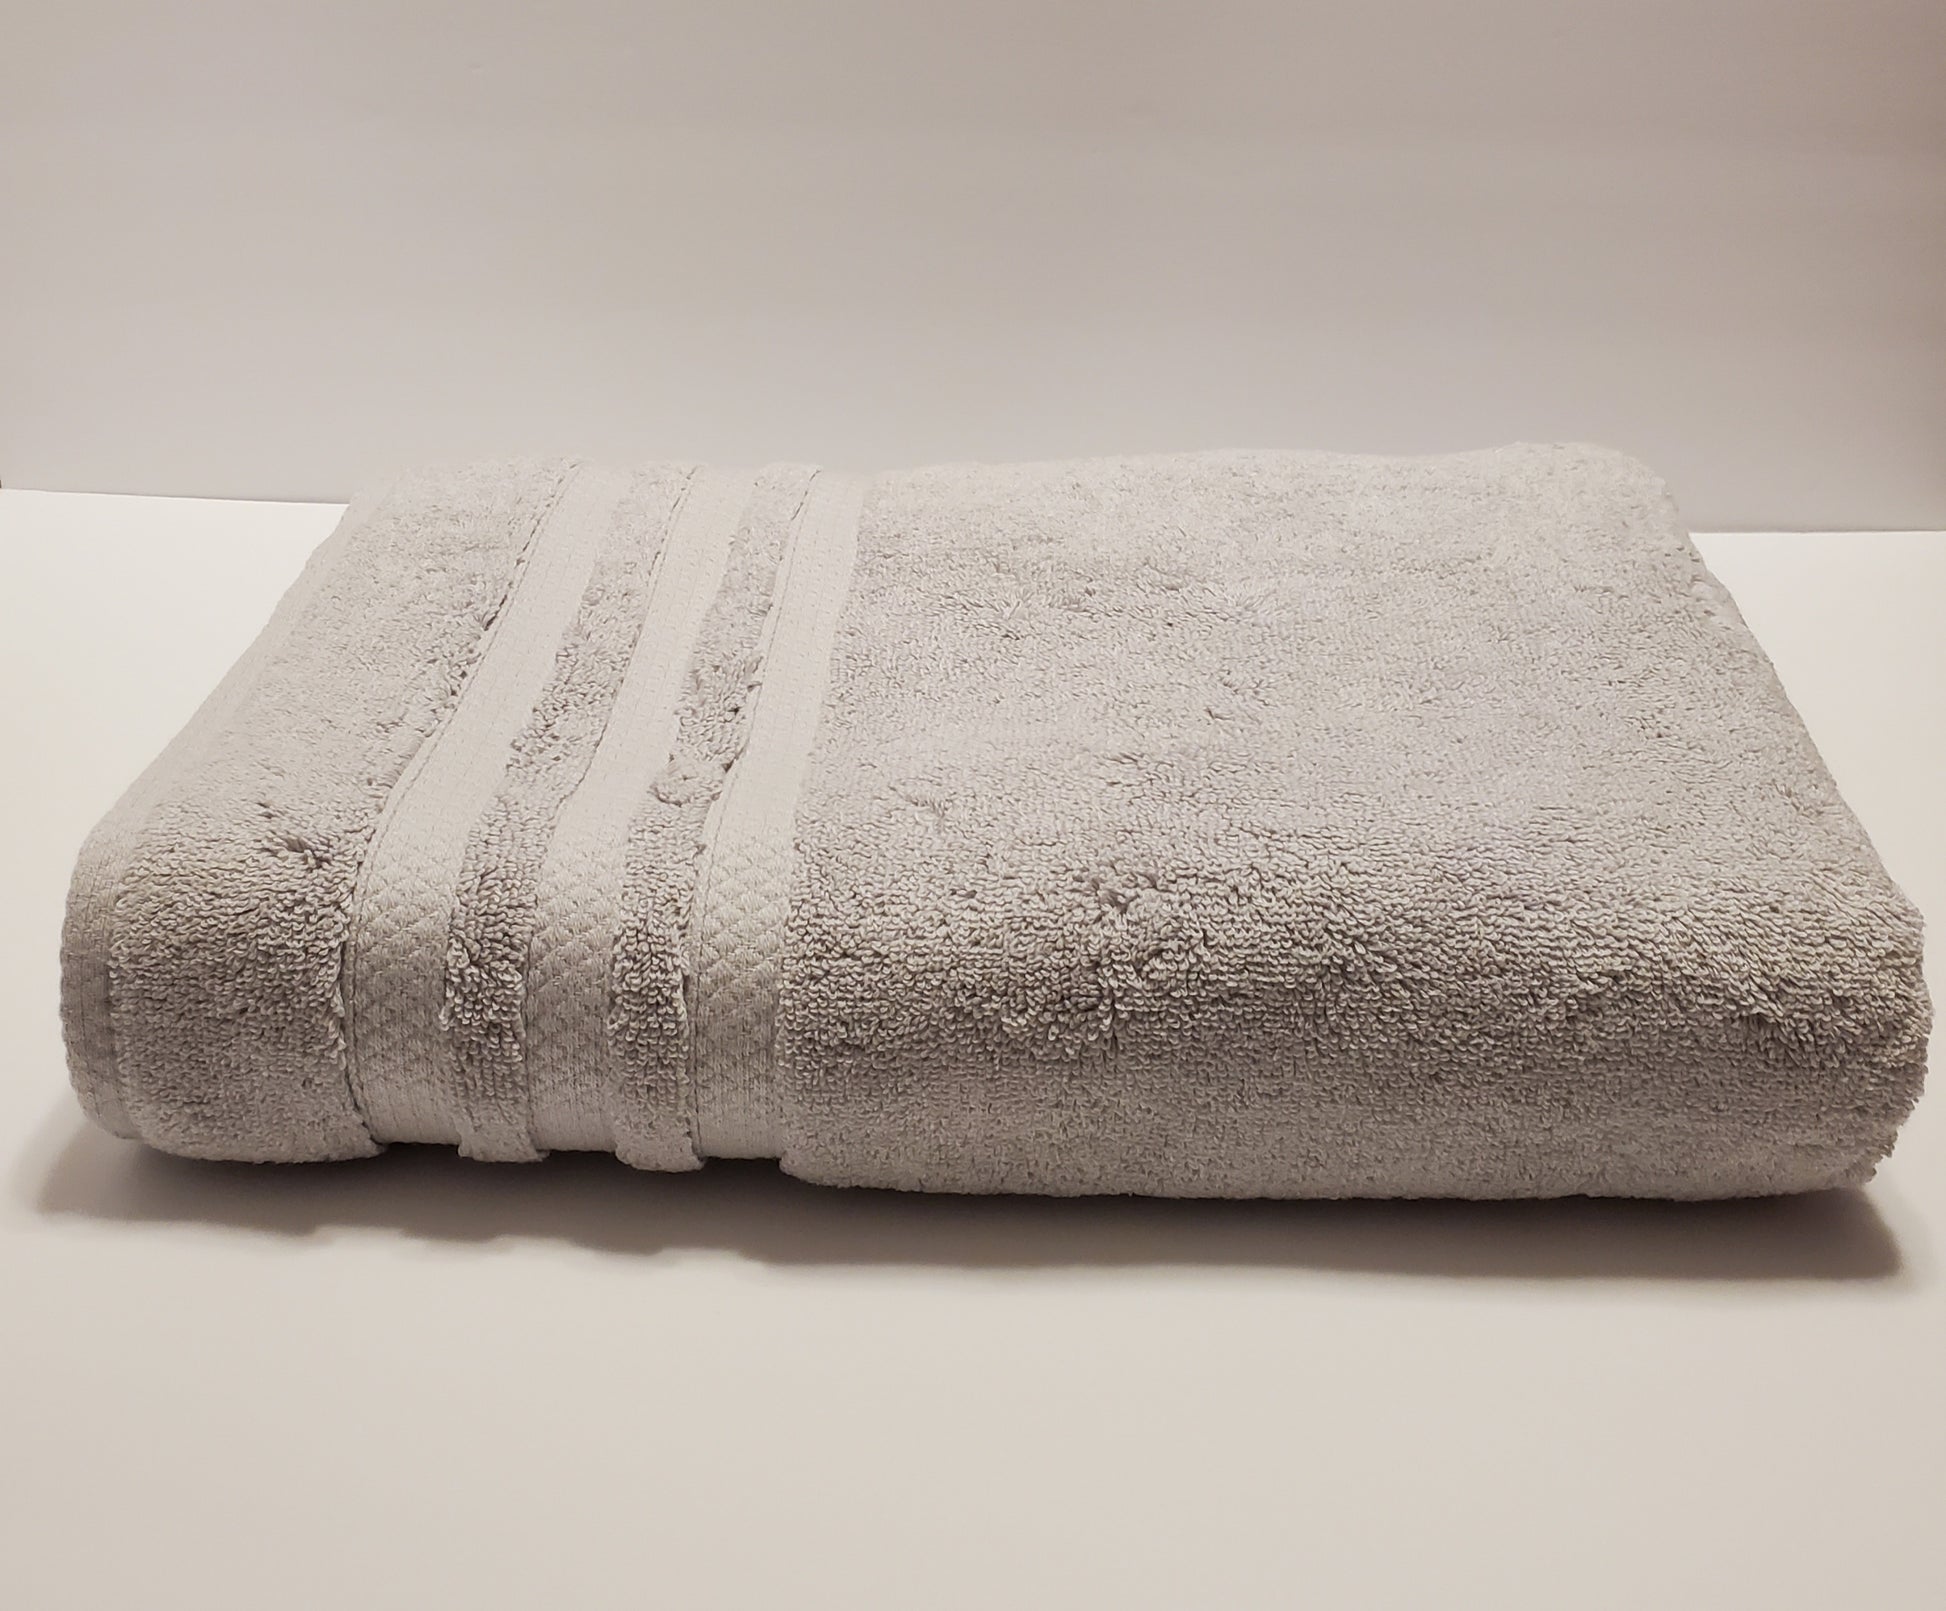 Liz Claiborne Signature Plush Logo Bath Towel